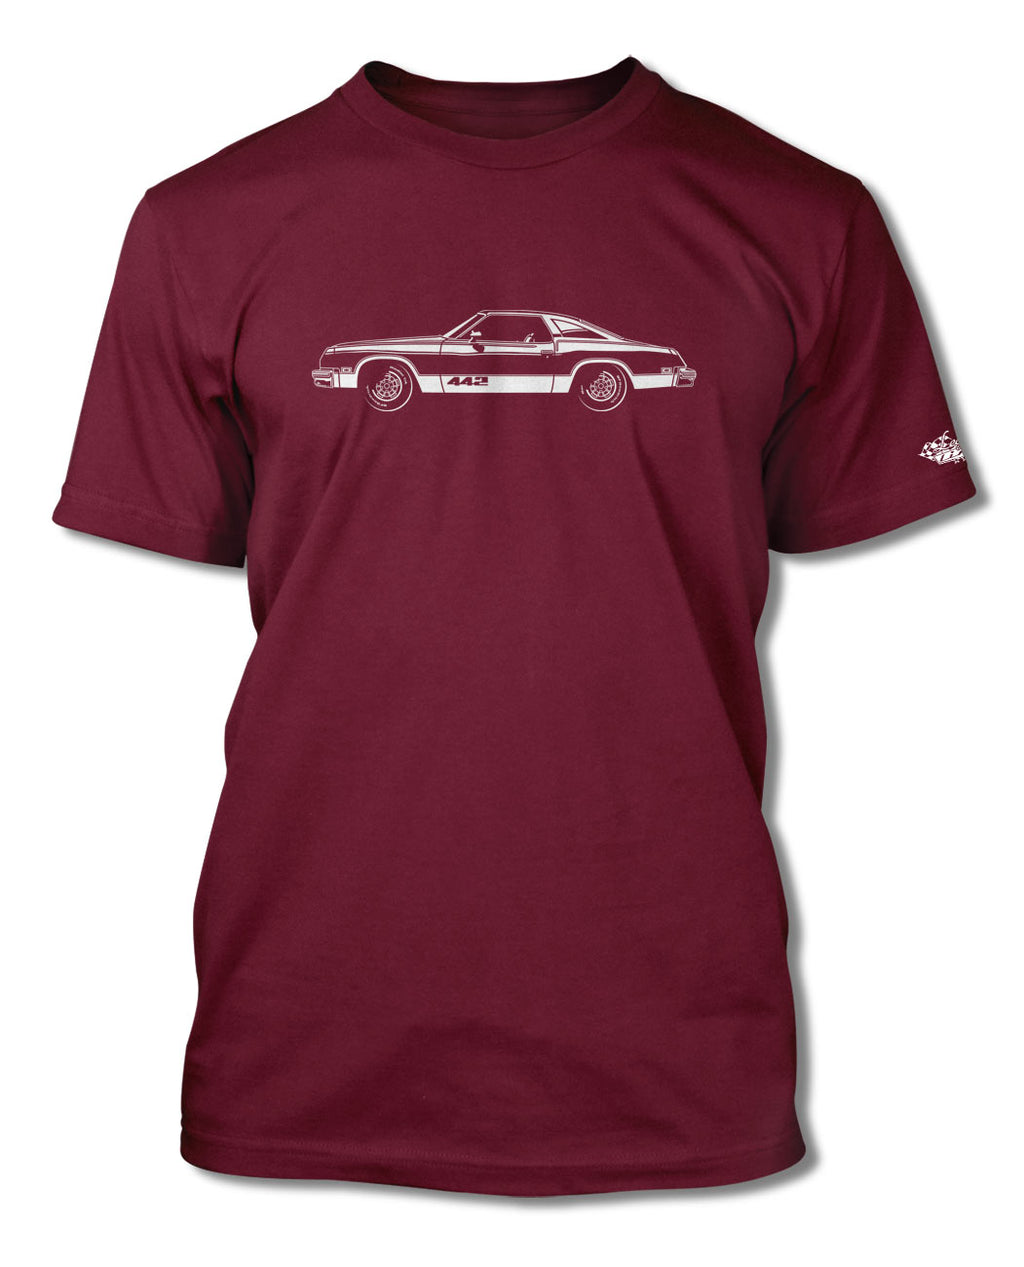 1976 Oldsmobile Cutlass 4-4-2 Coupe T-Shirt - Men - Side View